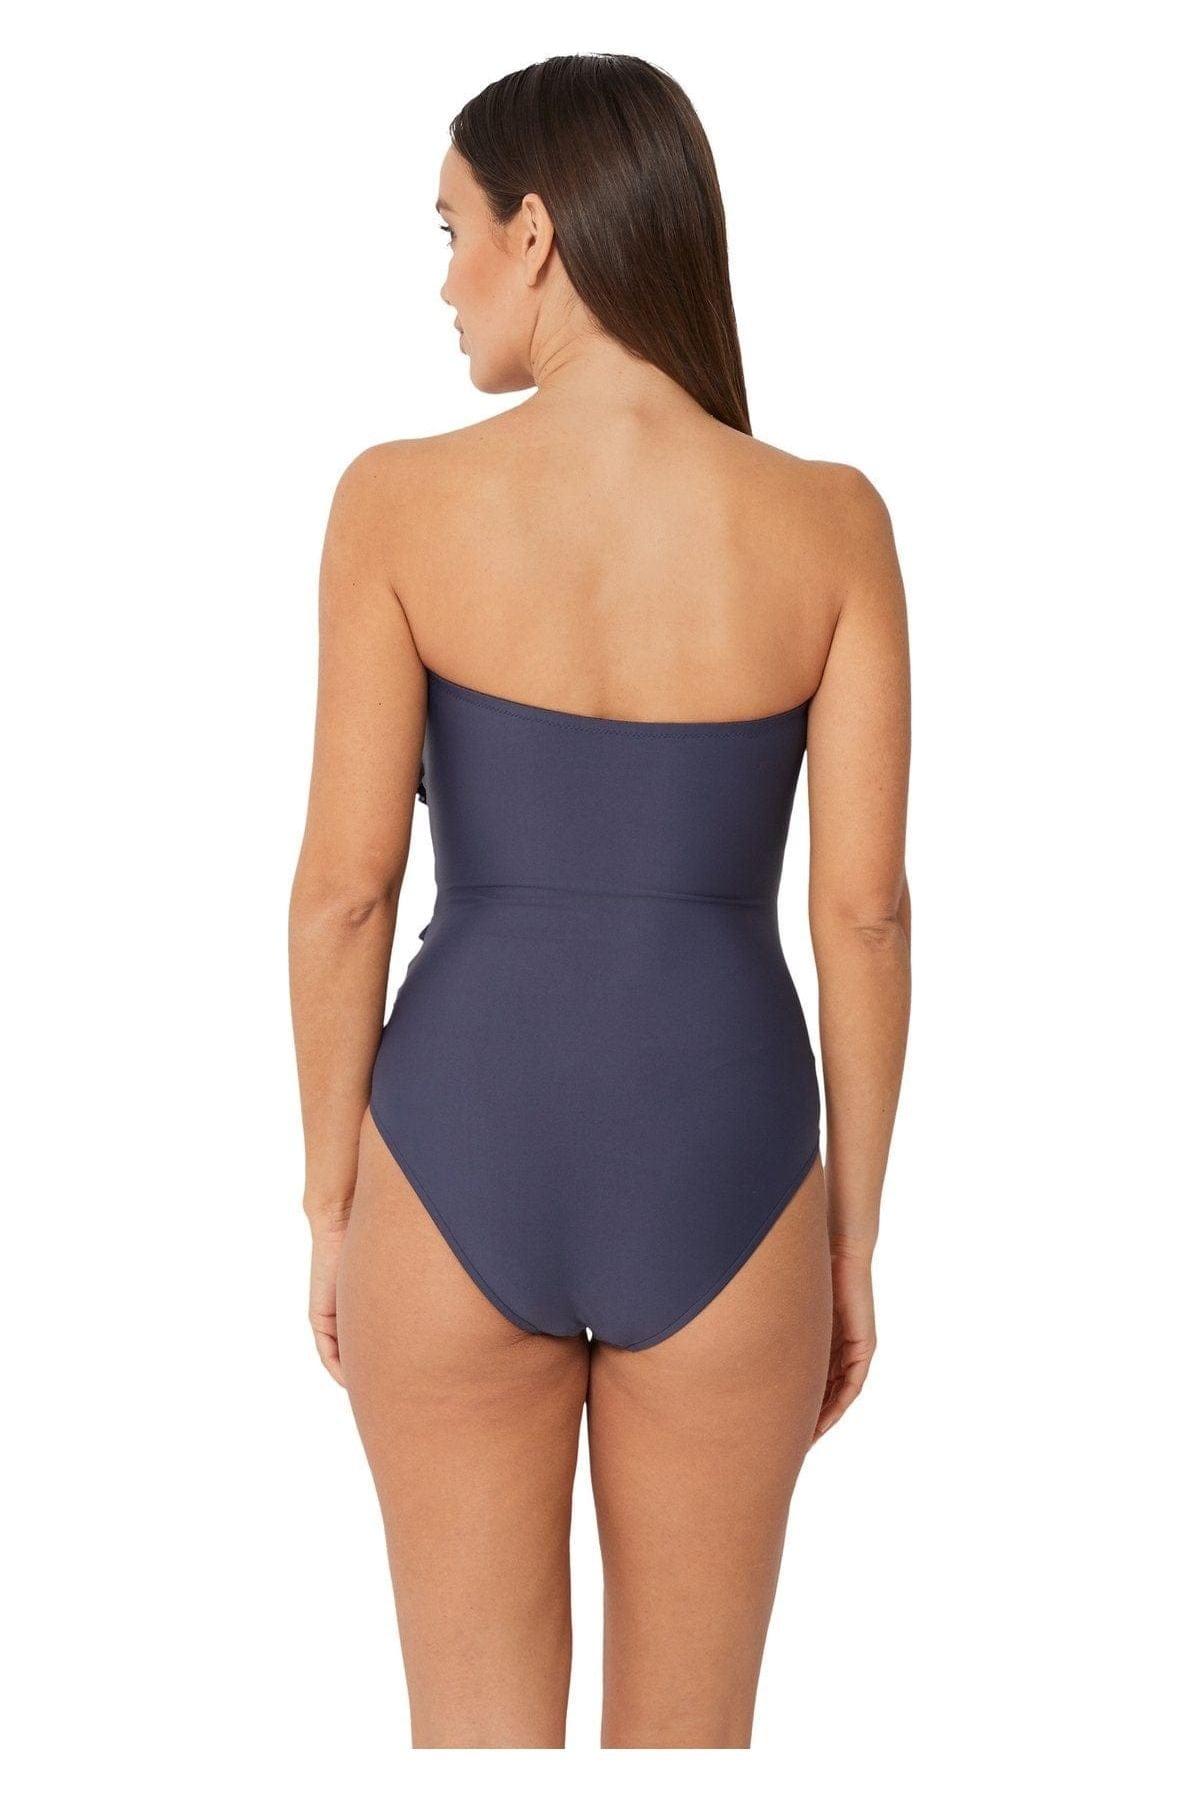 Spliced Bandeau Maillot - Nightfall - Monte & Lou - Splash Swimwear  - Monte & Lou, One Pieces, Womens - Splash Swimwear 